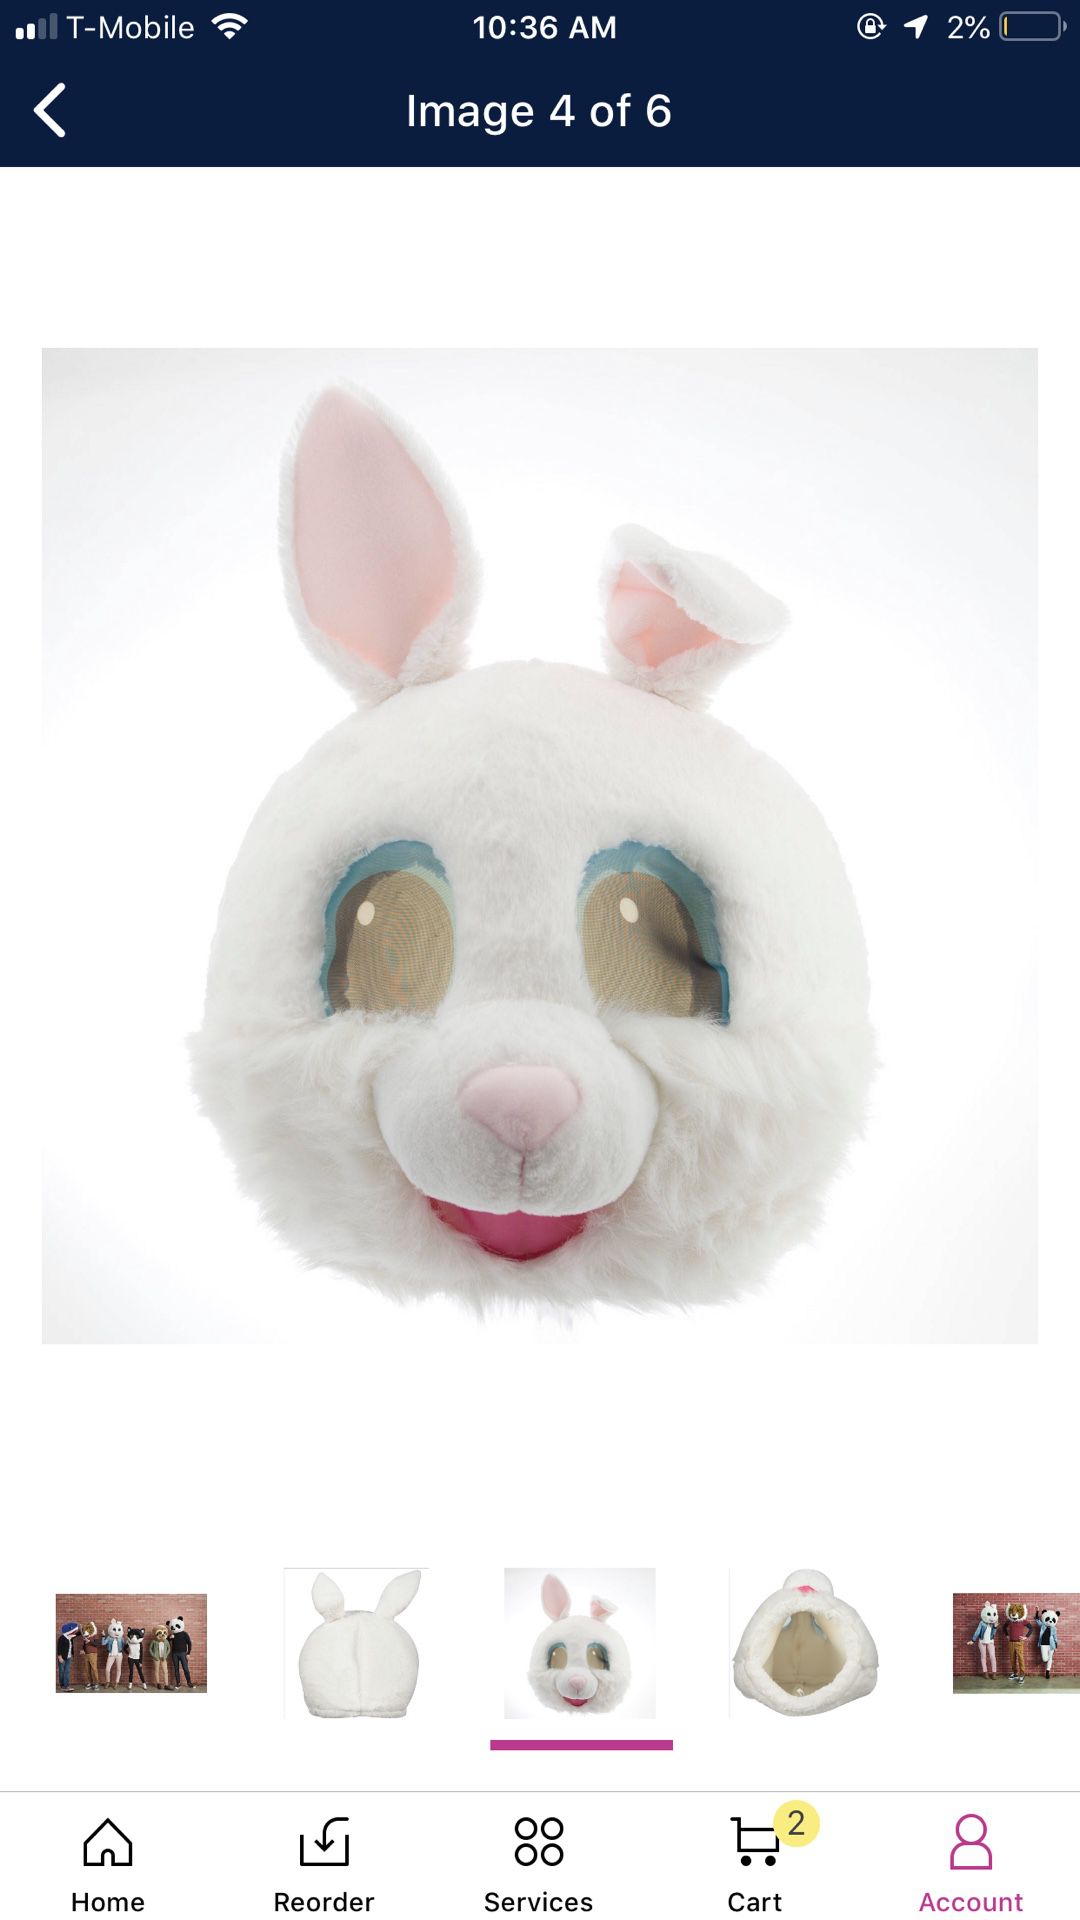 Easter bunny mask